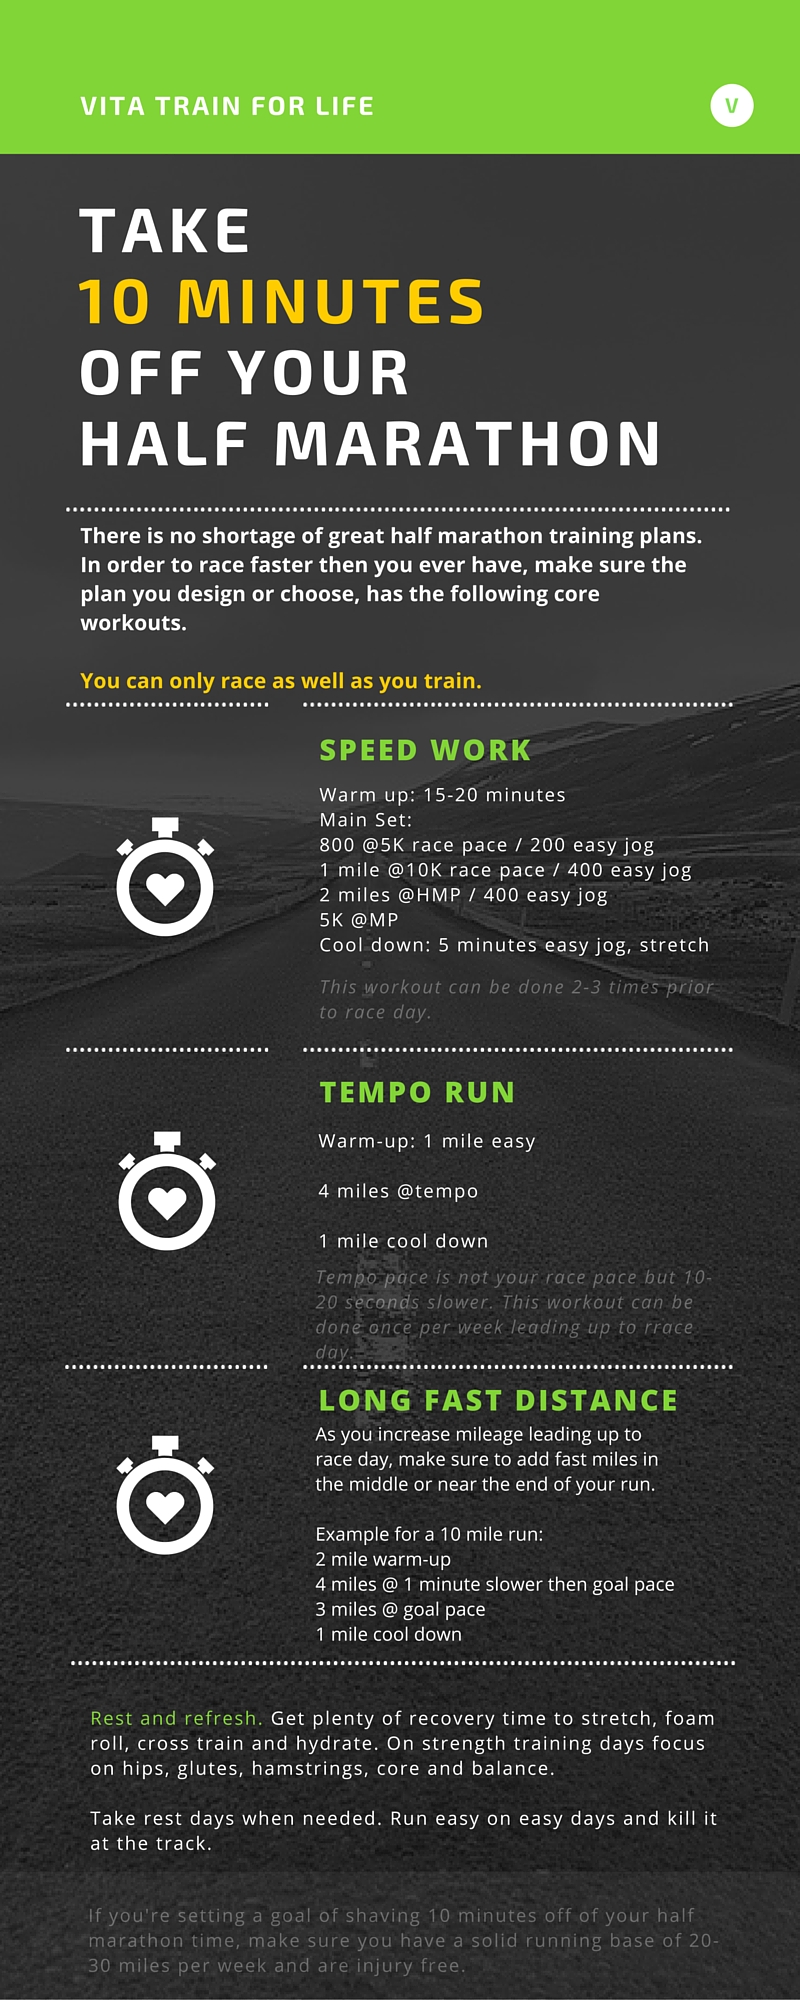 How to Improve Half Marathon Time